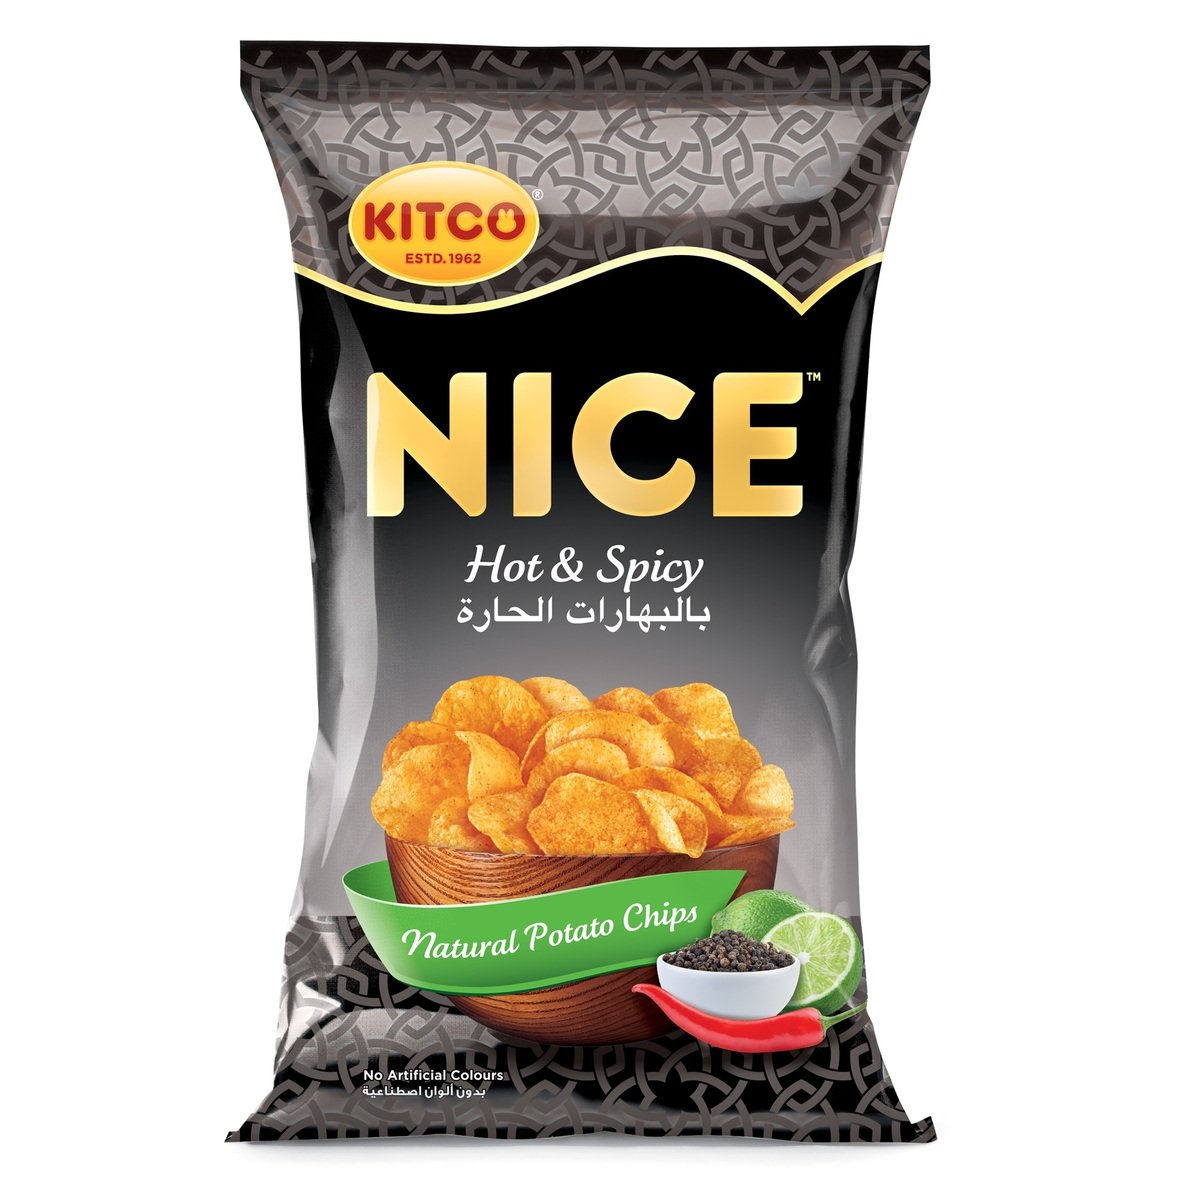 Kitco Nice Hot & Spicy Potato Chips 210 g